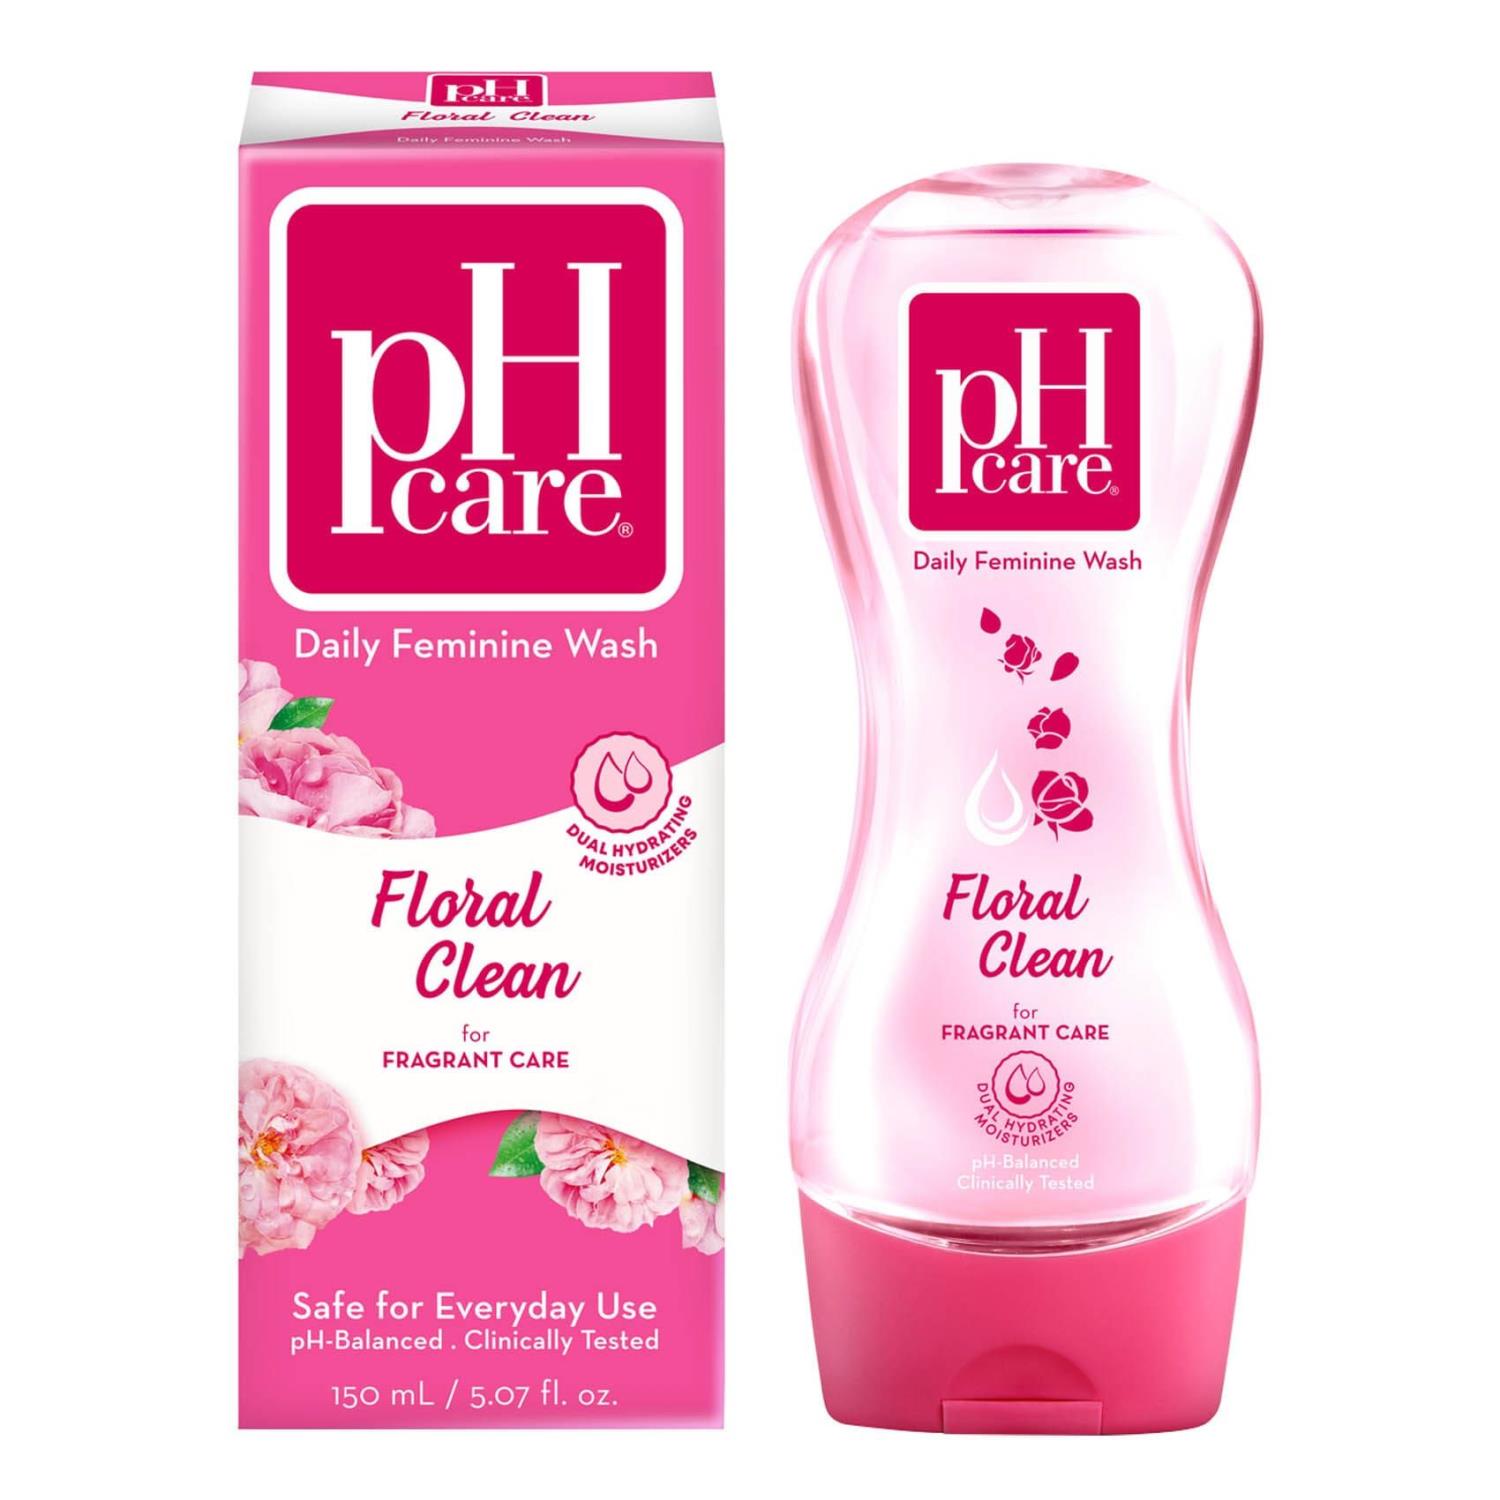 PHCARE Feminine wash floral care